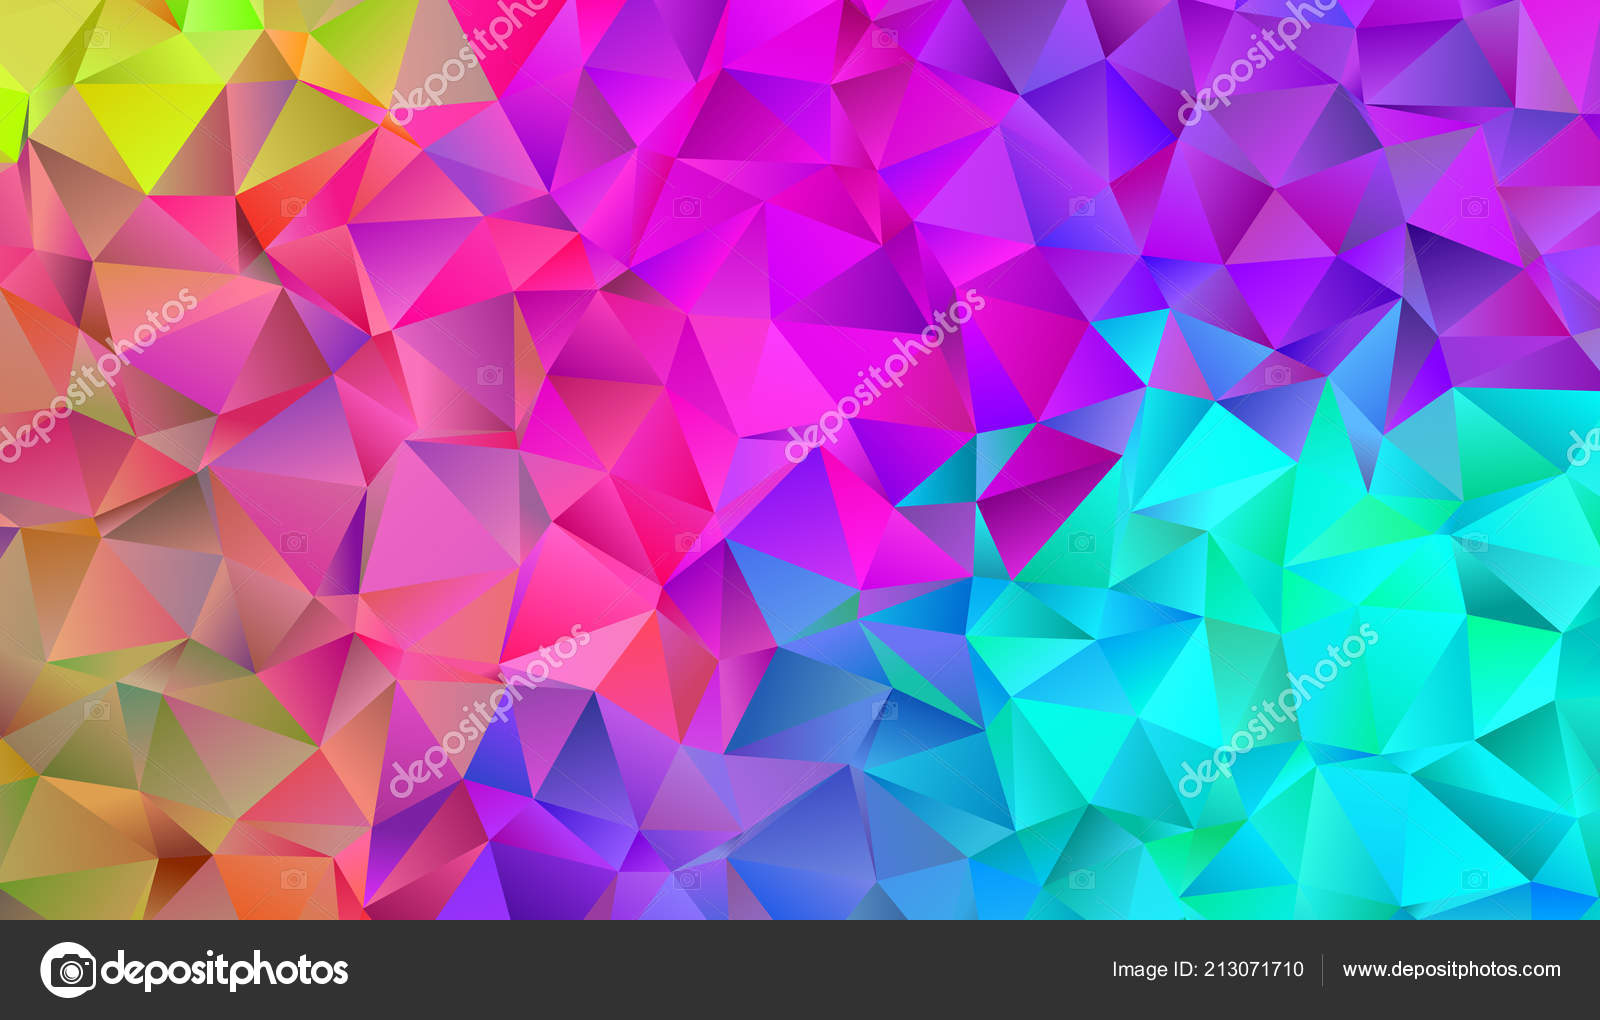 Imagens Geometricas - HD Wallpaper 